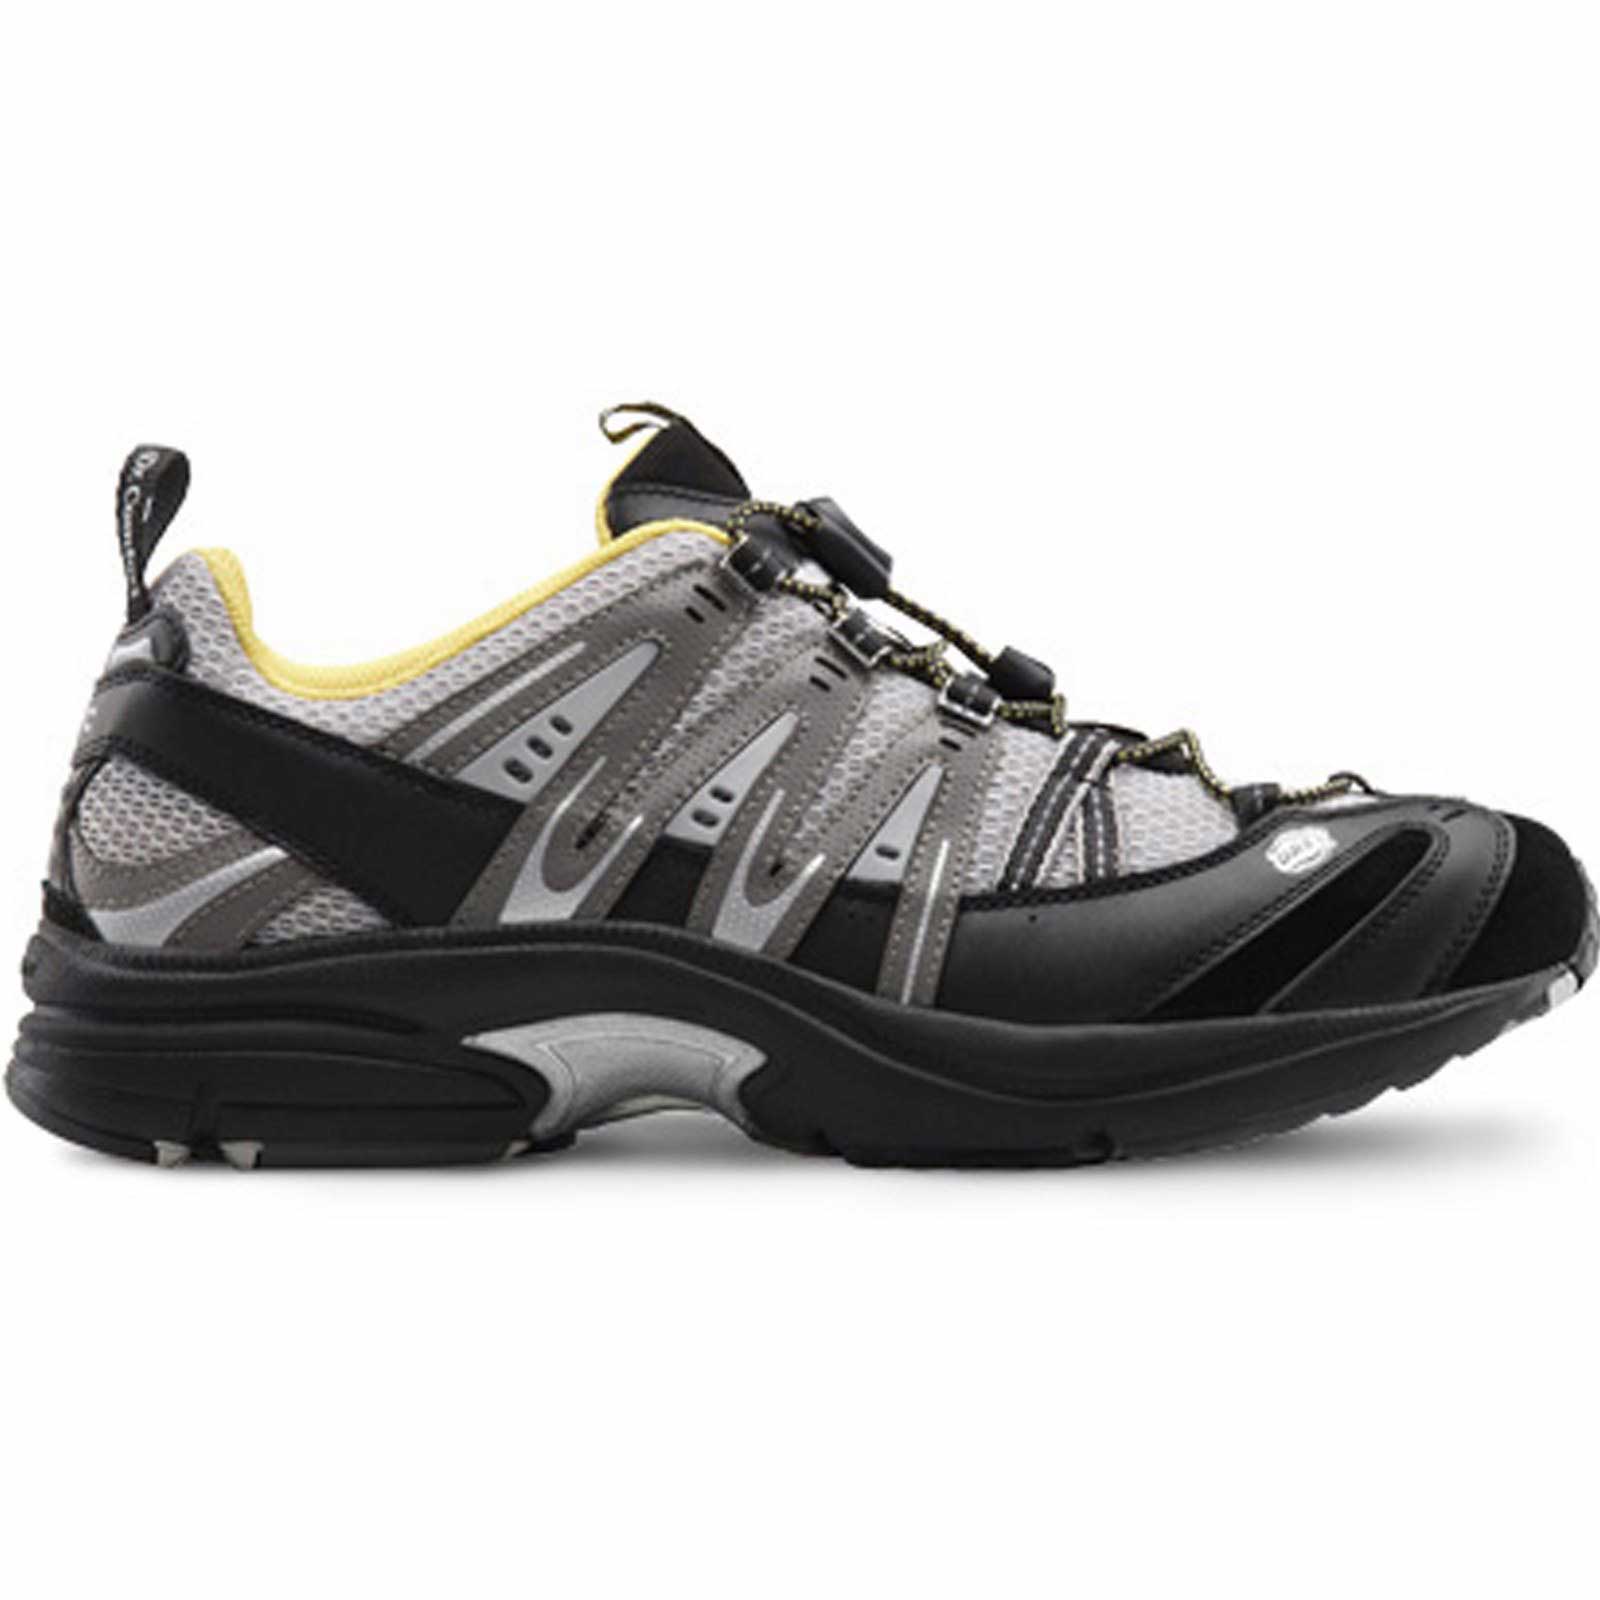 Dr. Comfort Performance Men's Athletic Shoe: 10.5 Wide (E/2E) Metallic/Red Elastic & Standard Laces - image 5 of 5